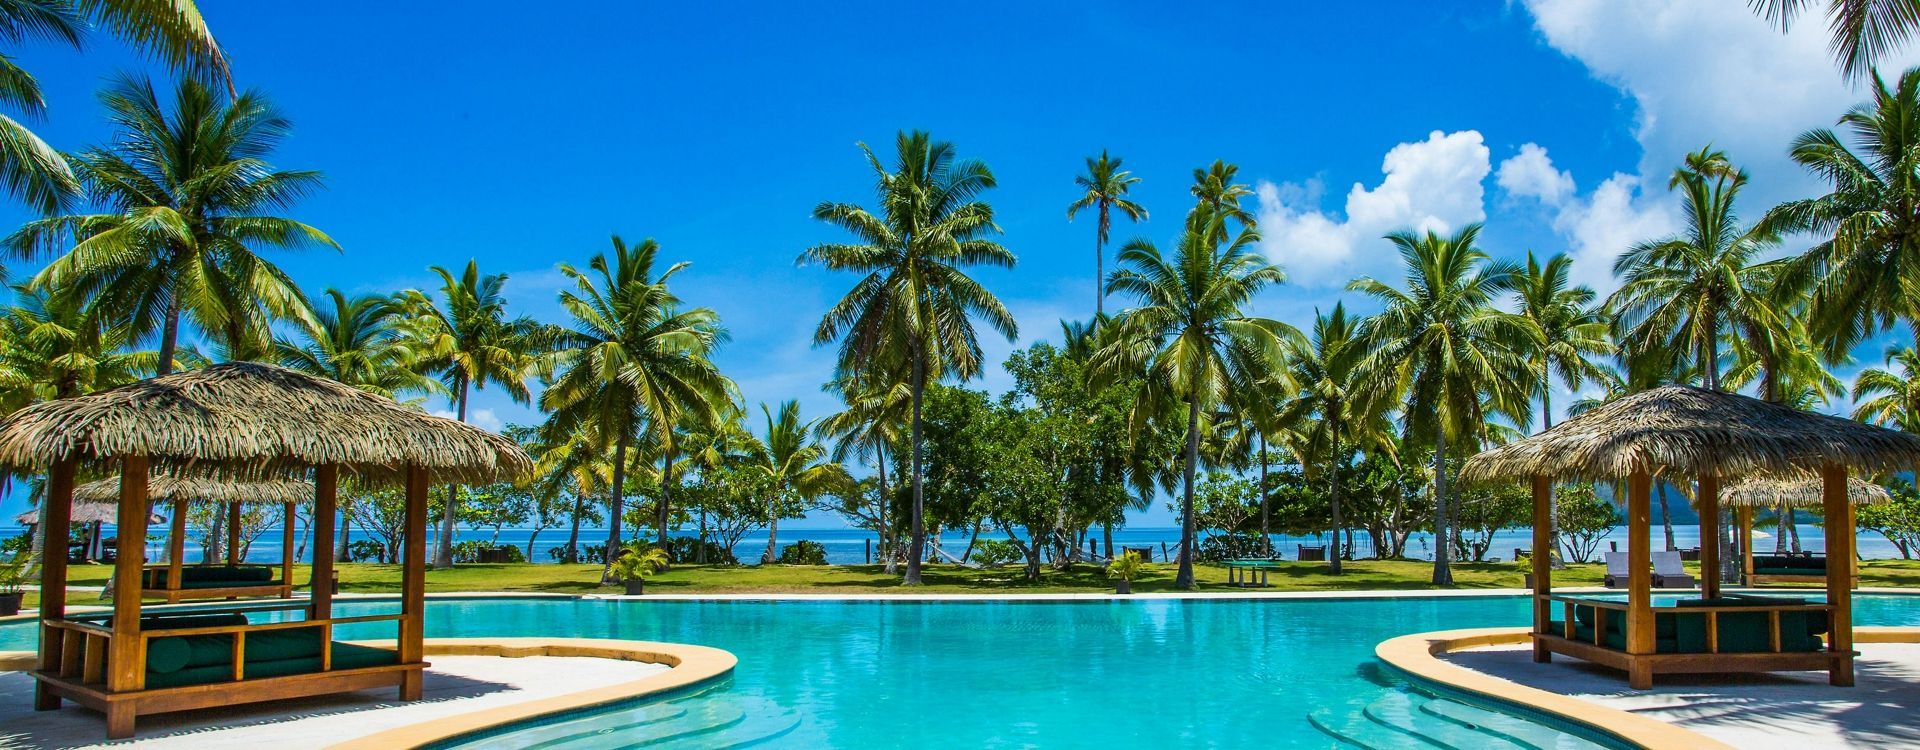 Lomani Island Resort-Pool.jpg